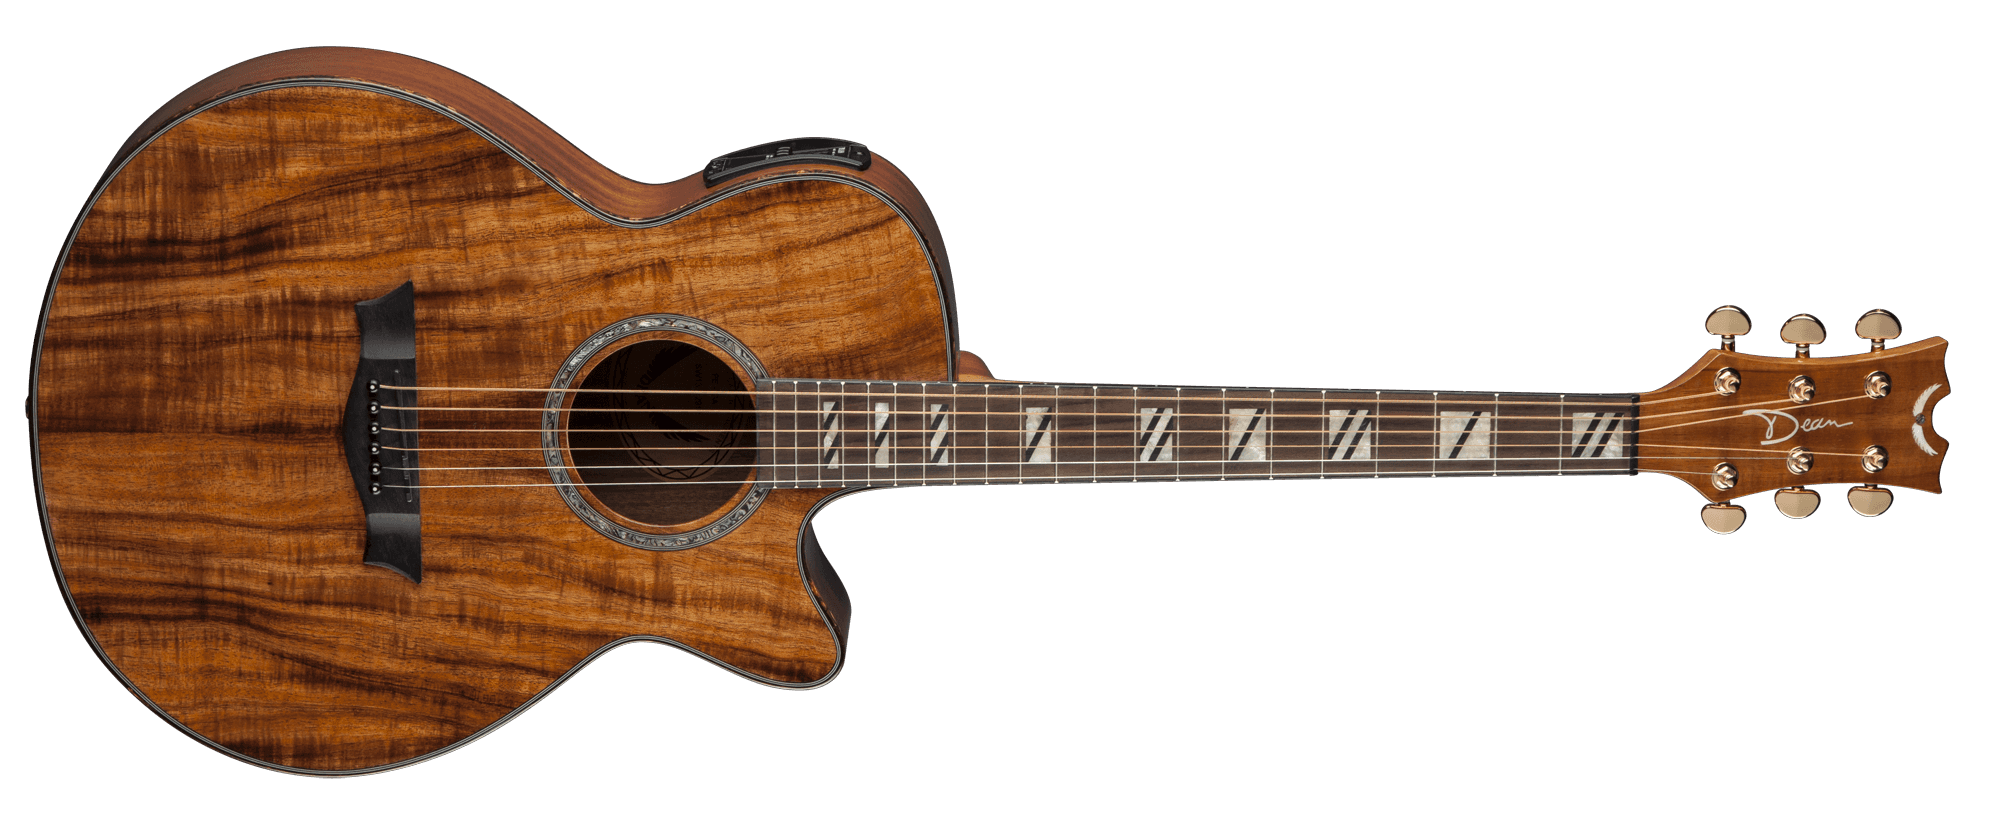 Wooden Guitar Transparent Images